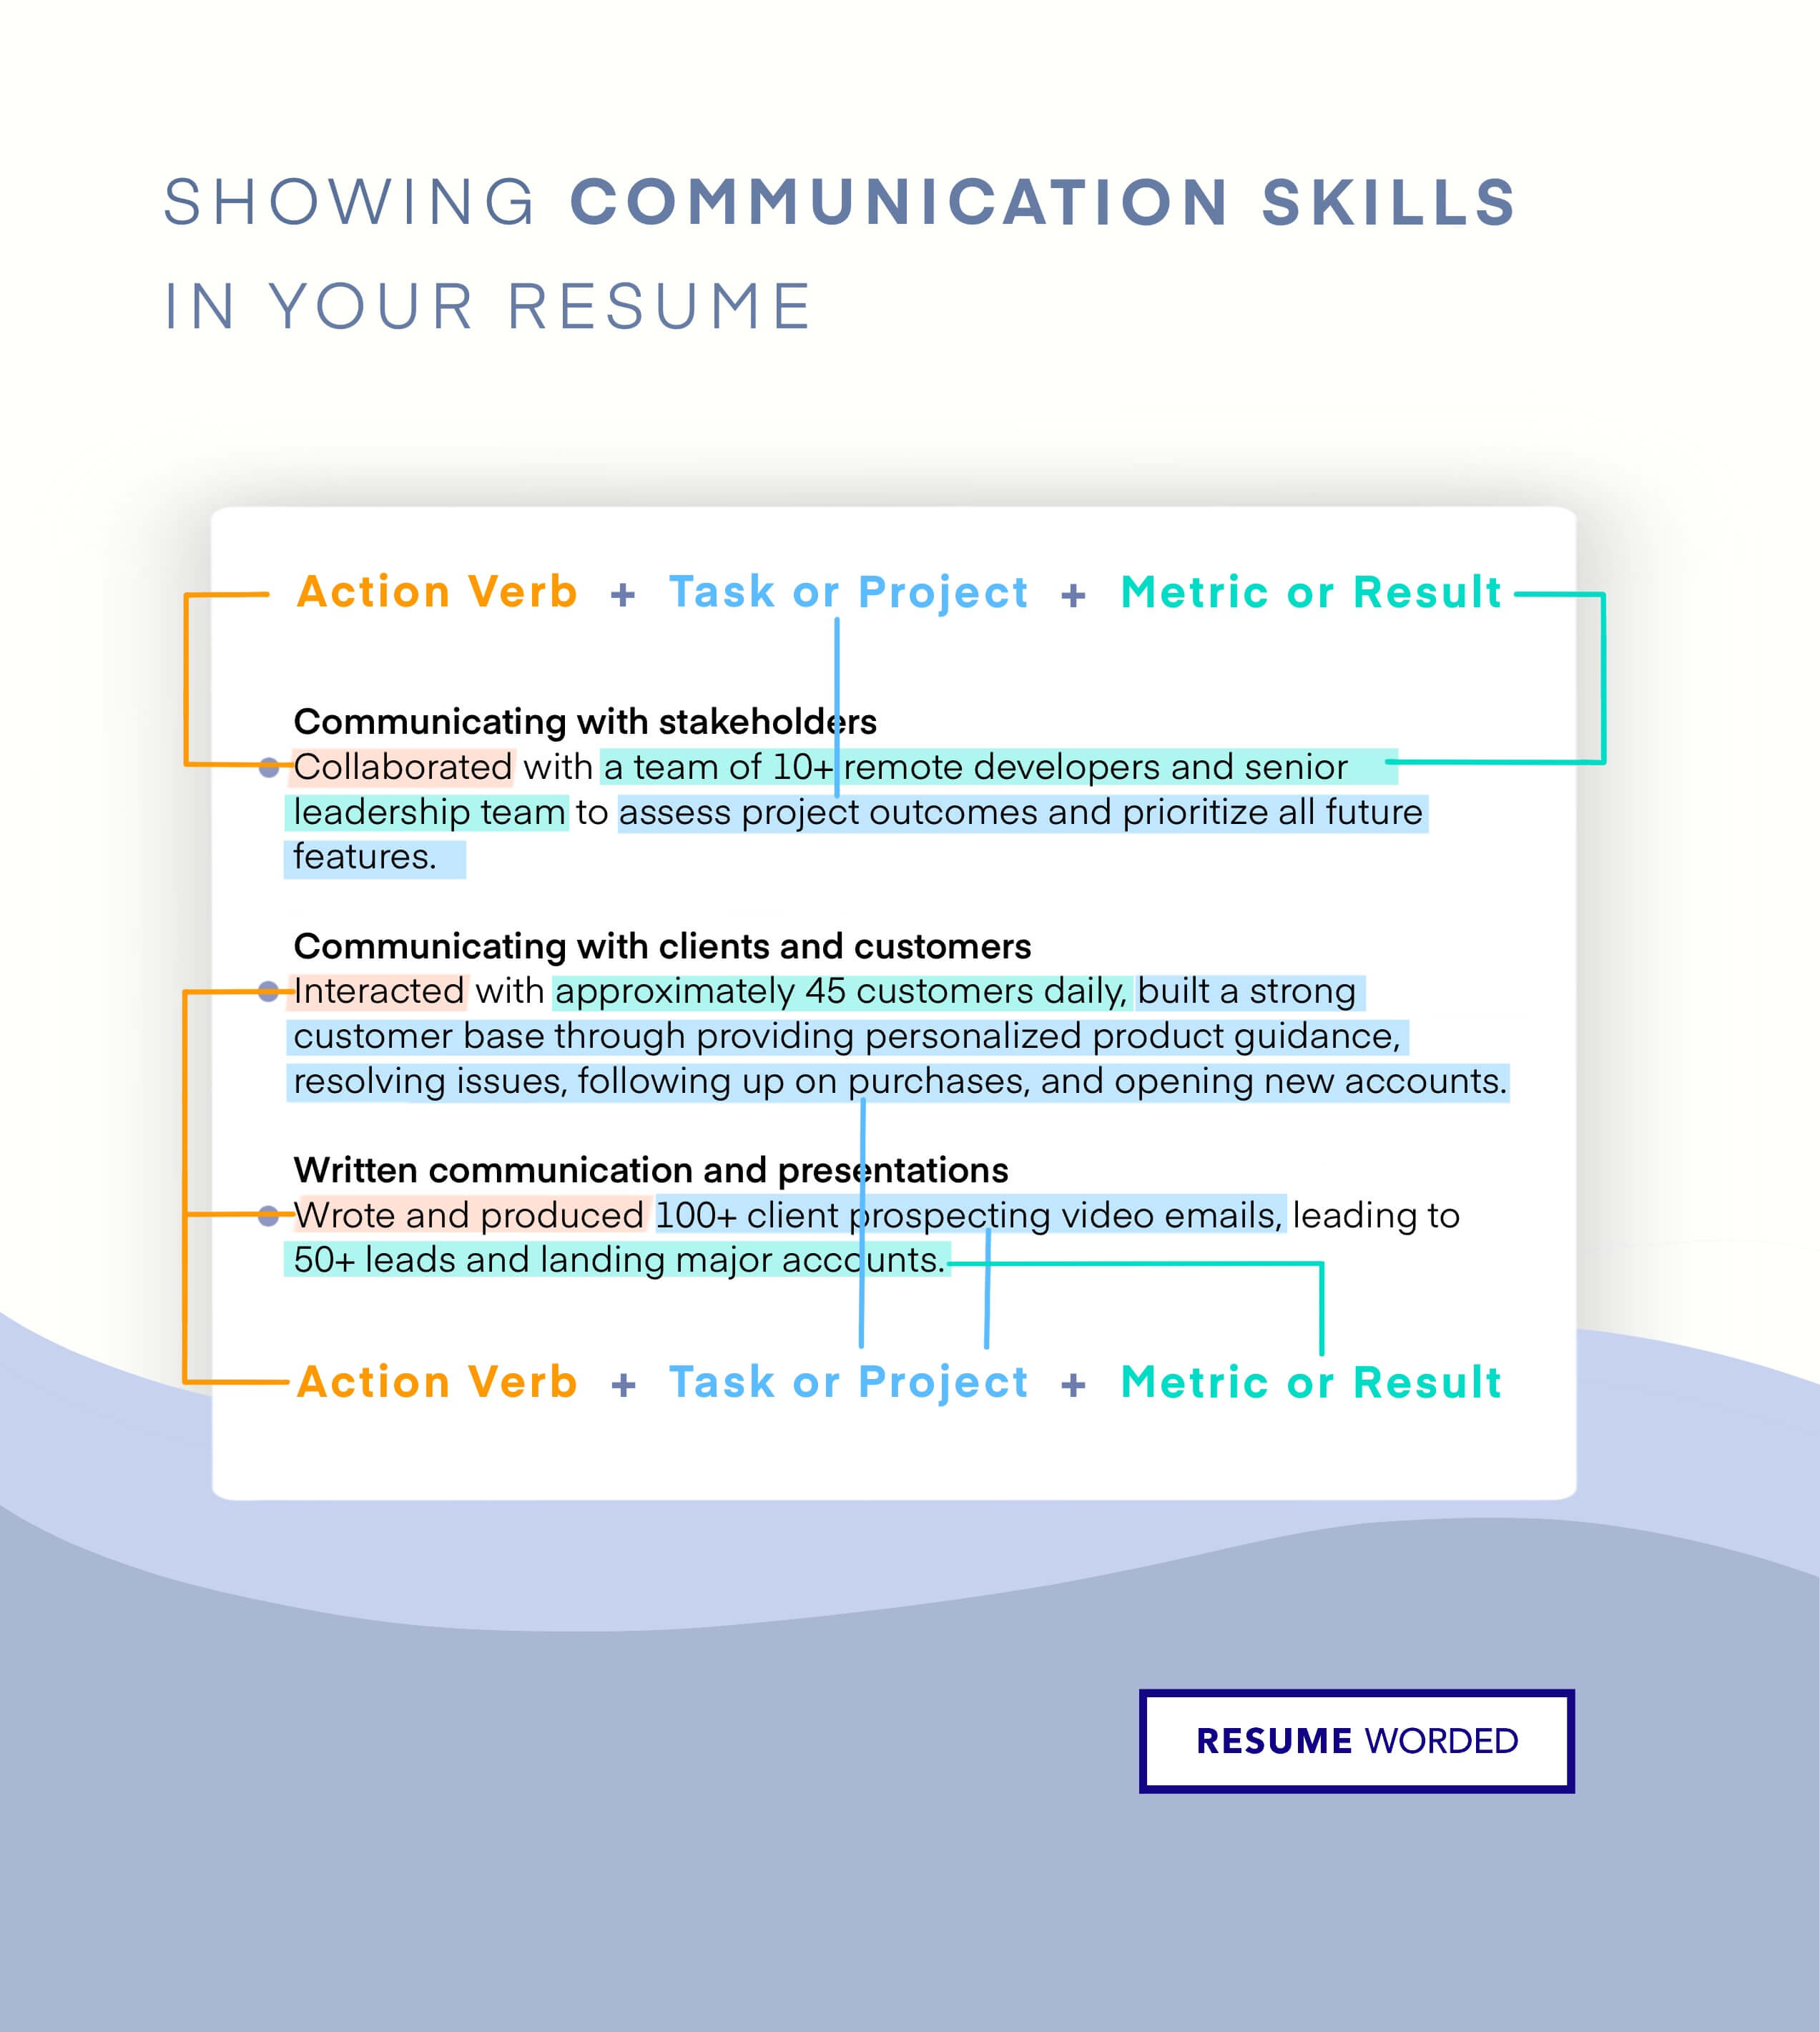 Showcase Your Communication Skills - Quality Control Manager Resume